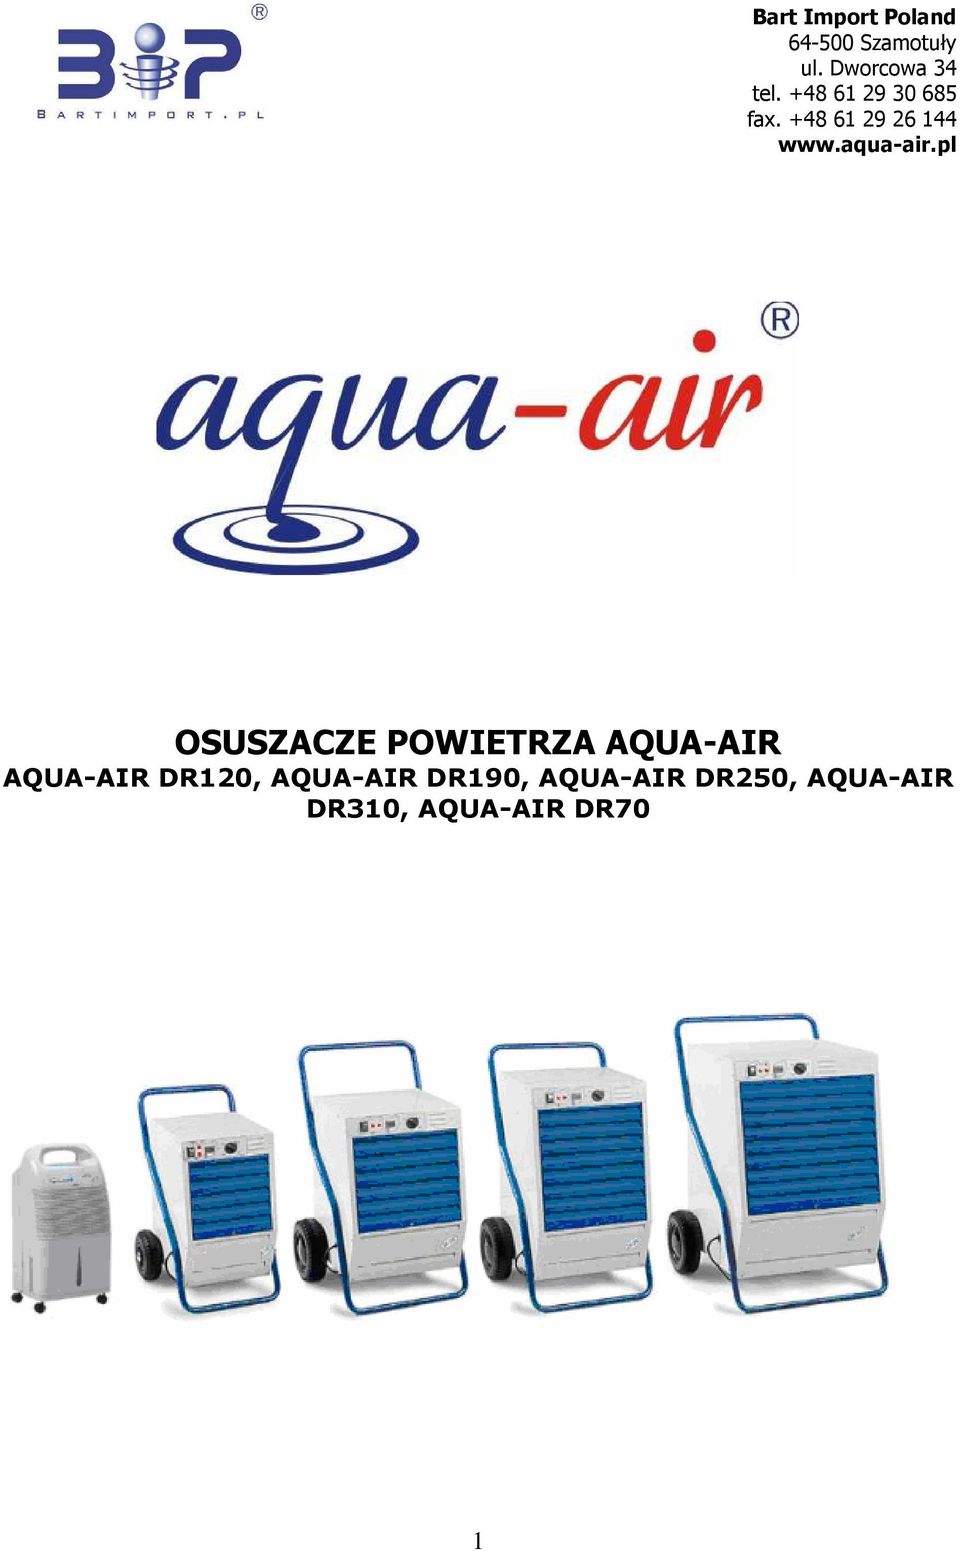 +48 61 29 26 144 www.aqua-air.